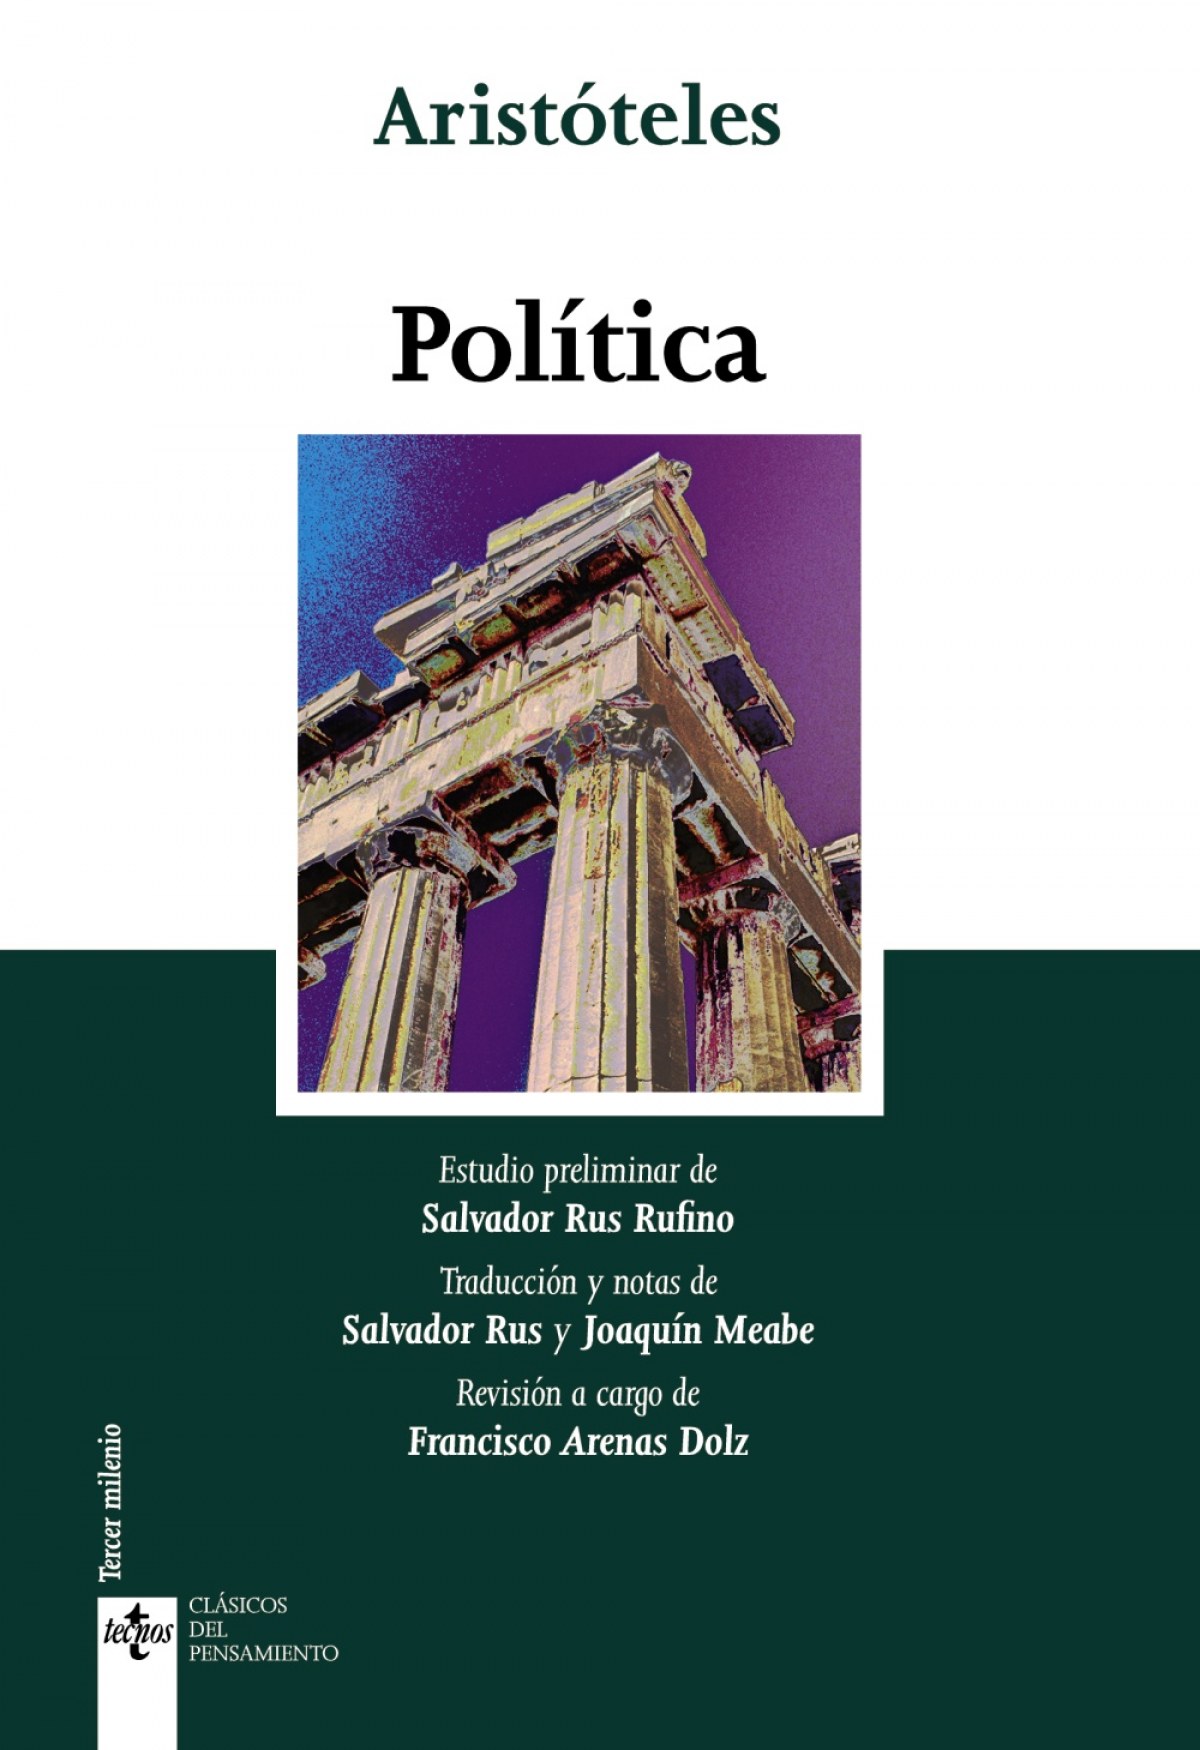 PolÍtica - Aristóteles